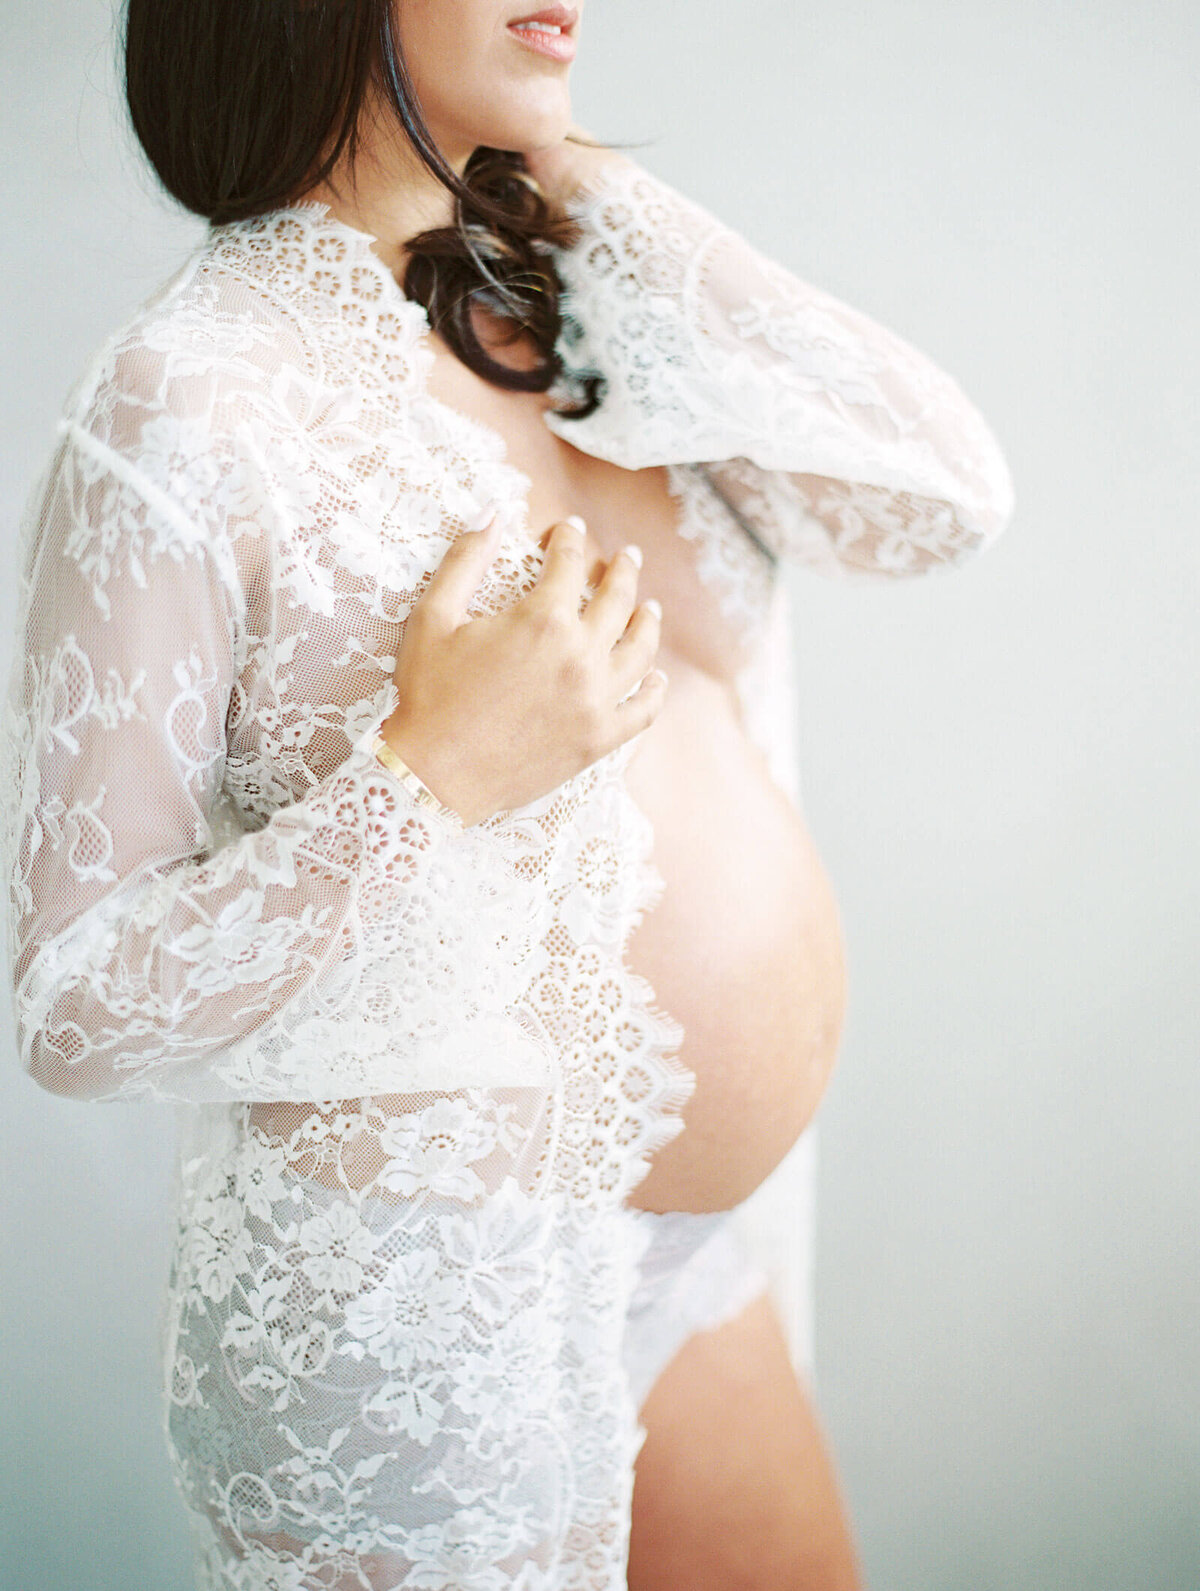 cristina-hope-photography-intimate-maternity-photos